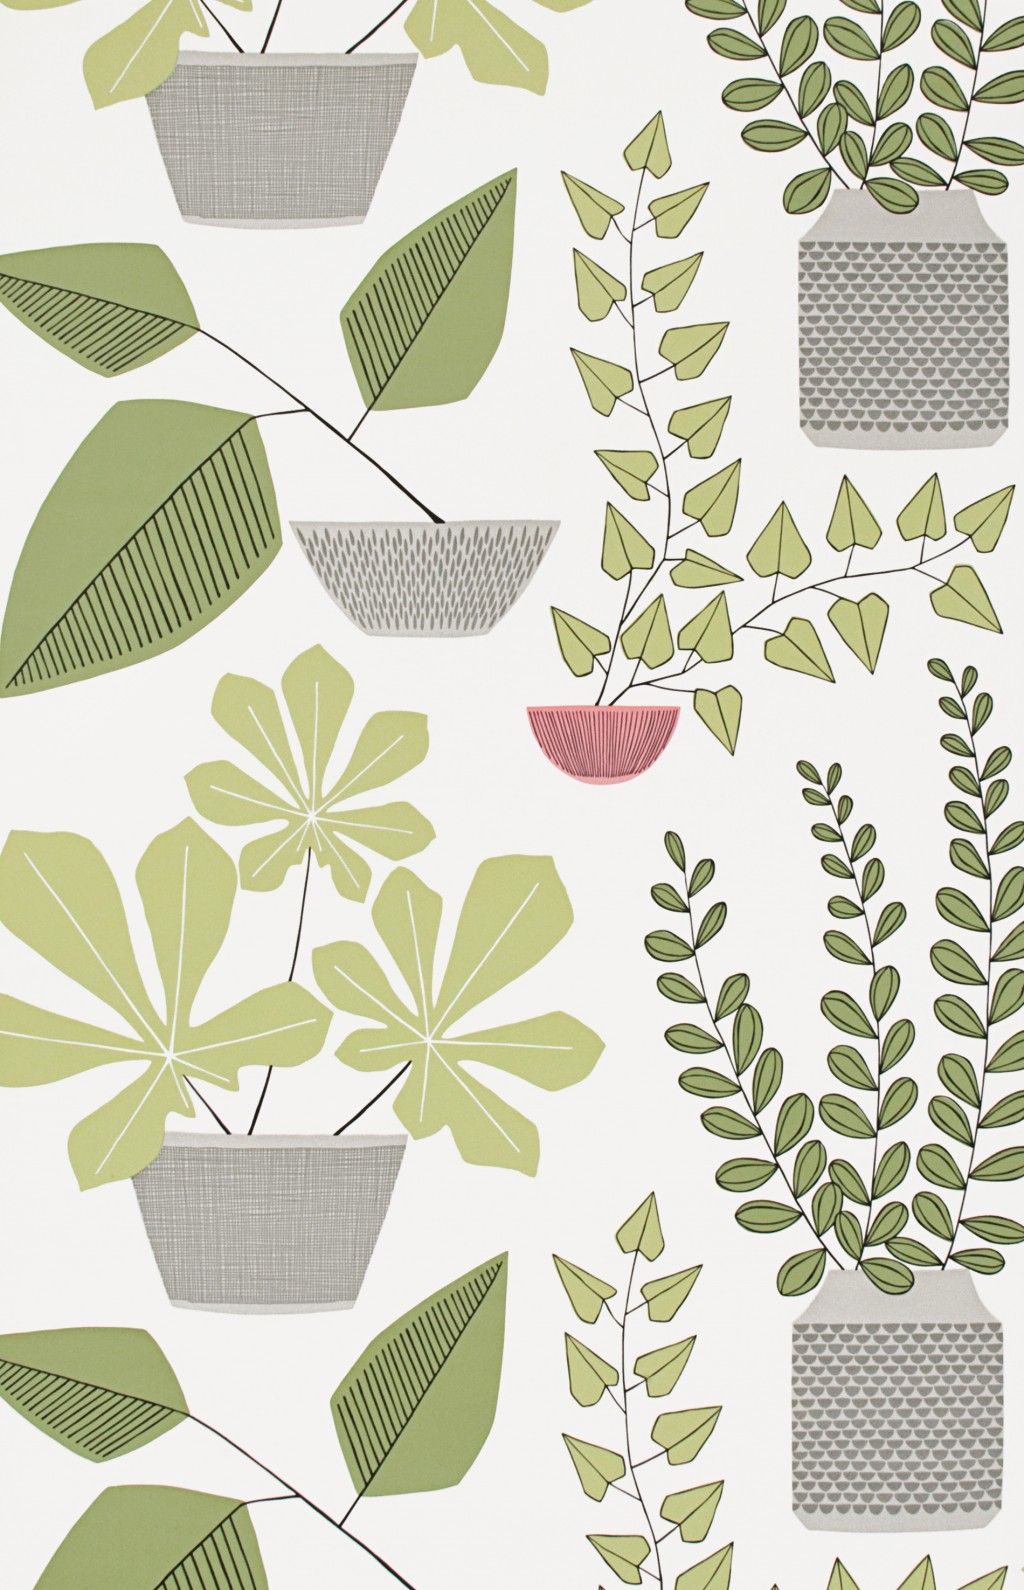 House Plants:Olive